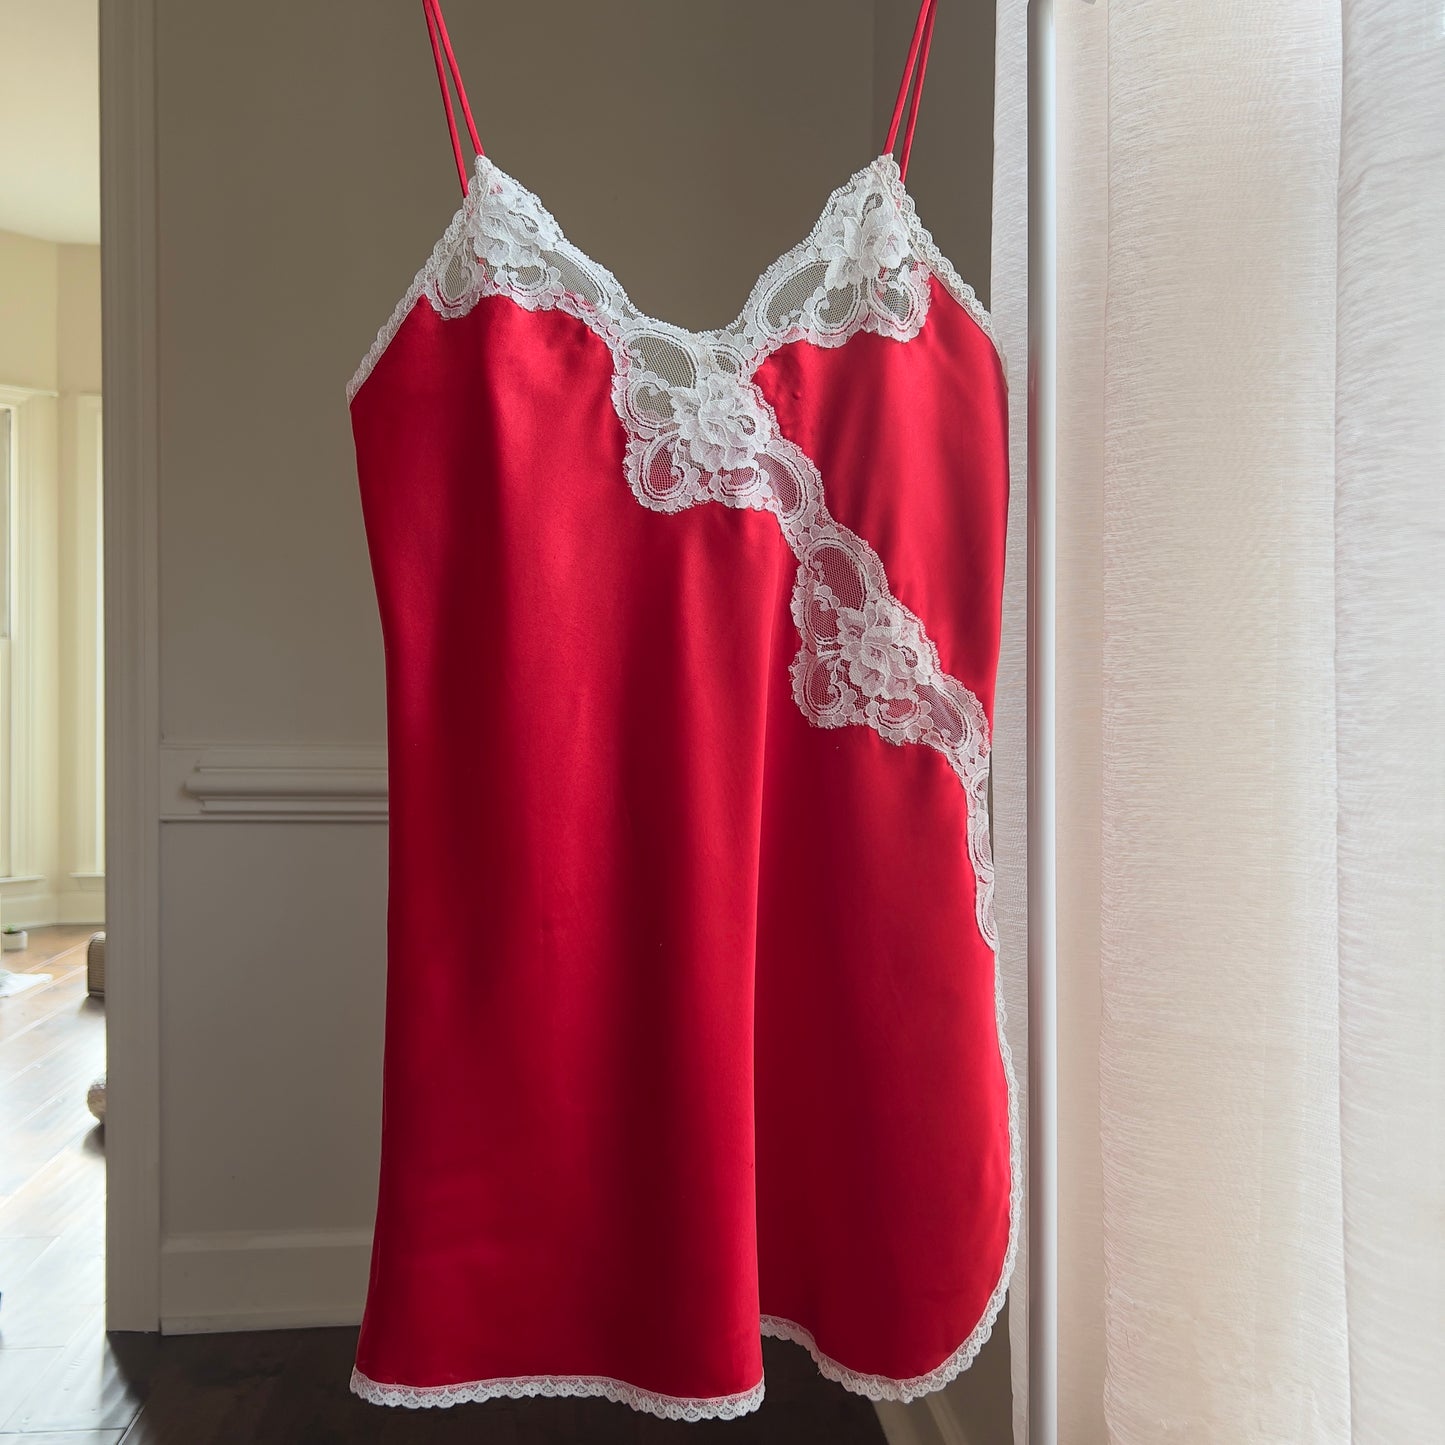 Stunning Satin Red Silk Slip Dress featuring Paisley Lace Cutout